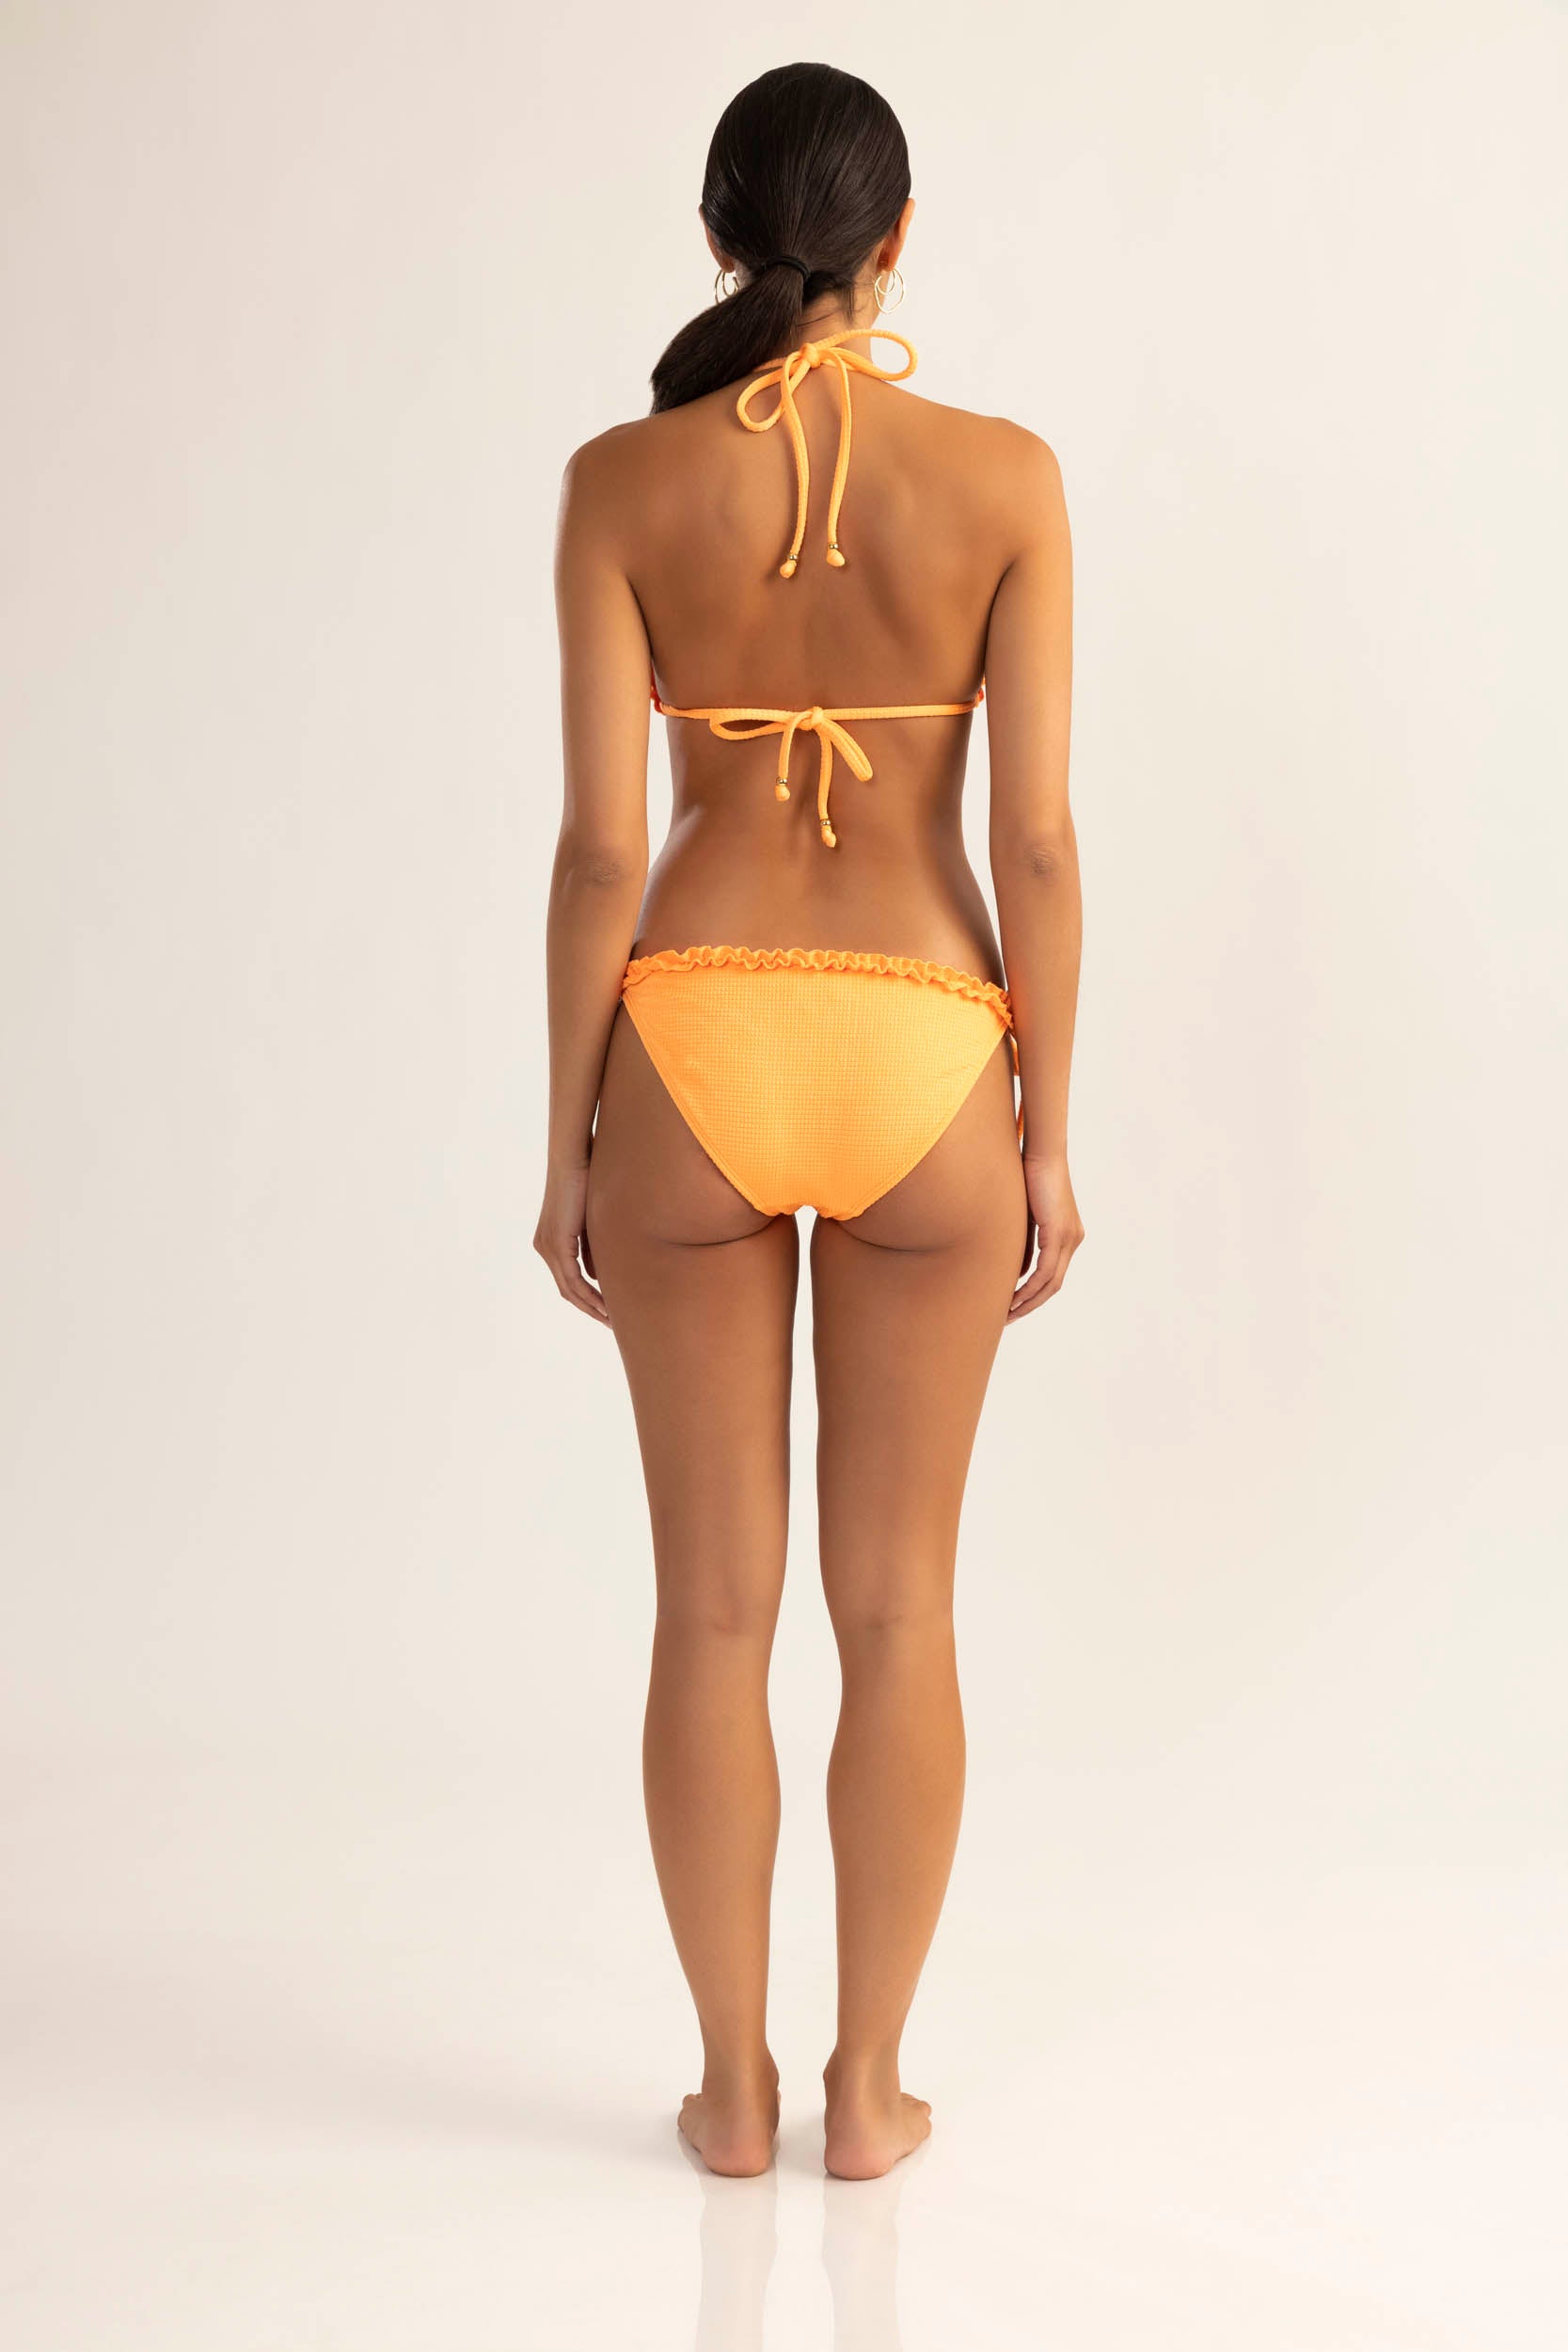 Yellow Stripes Ruffle Waisted Triangle Bikini Swimsuit